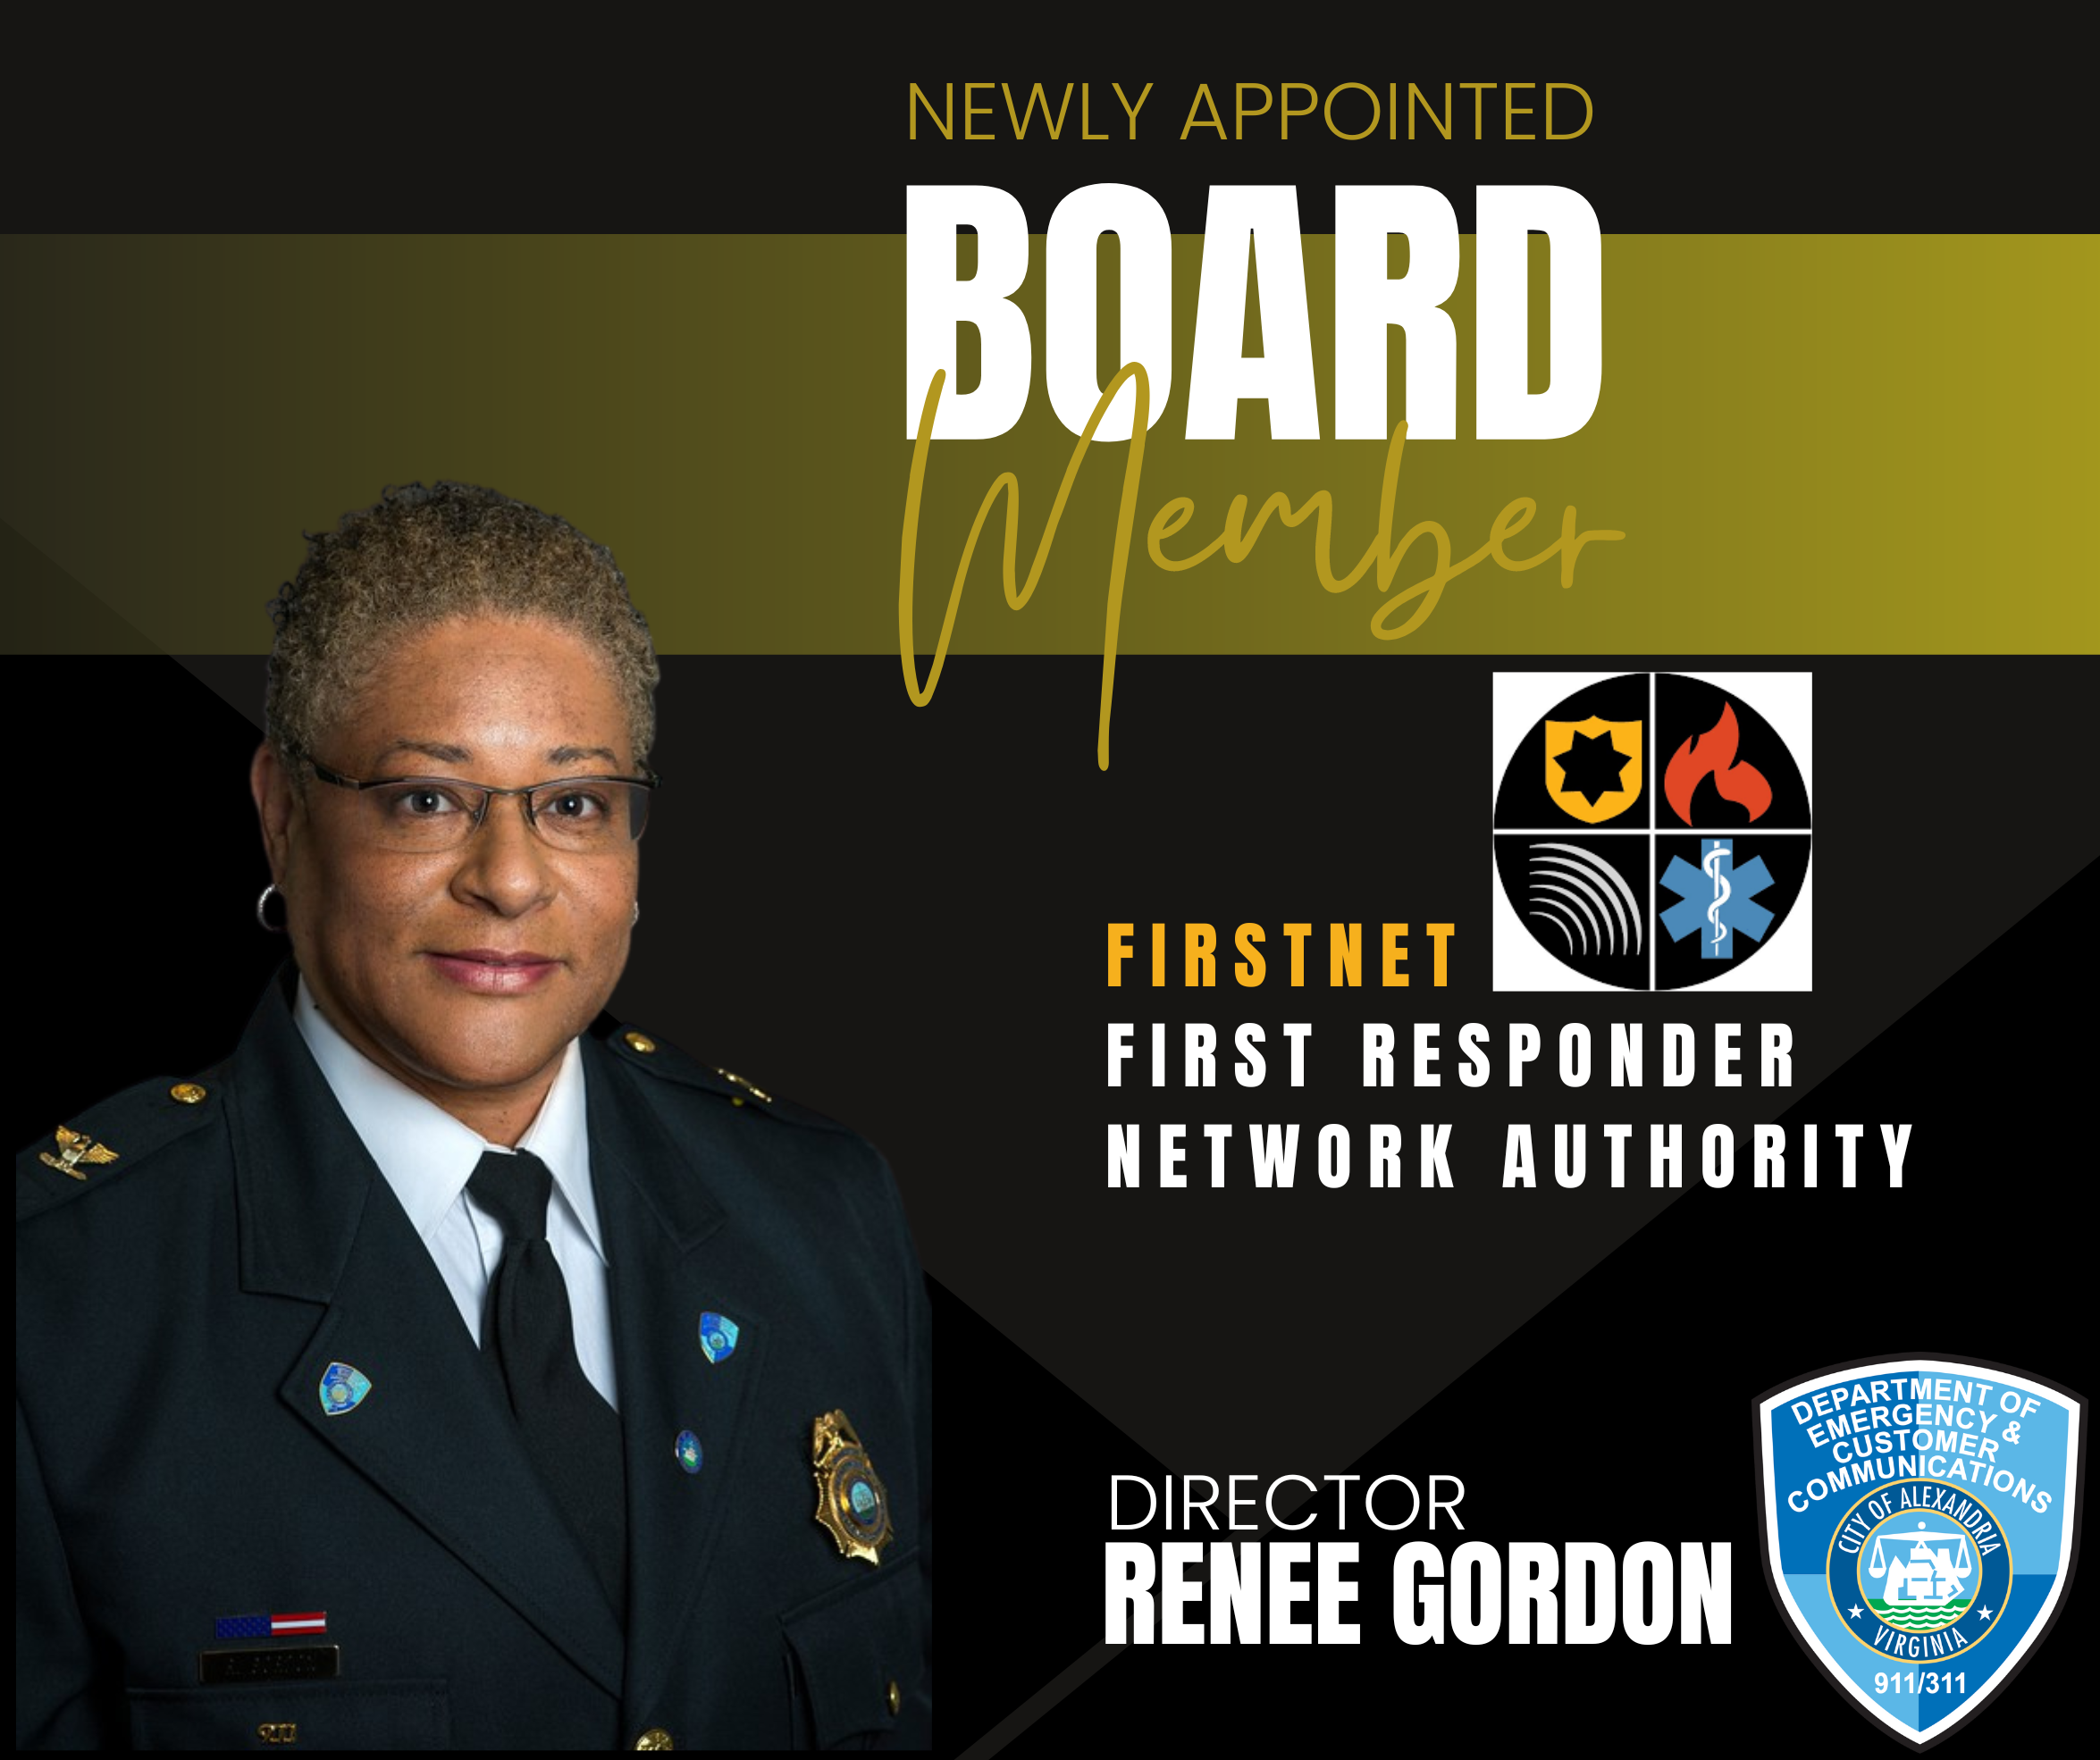 Commissioner Renee Gordon Board Member to FirstNet